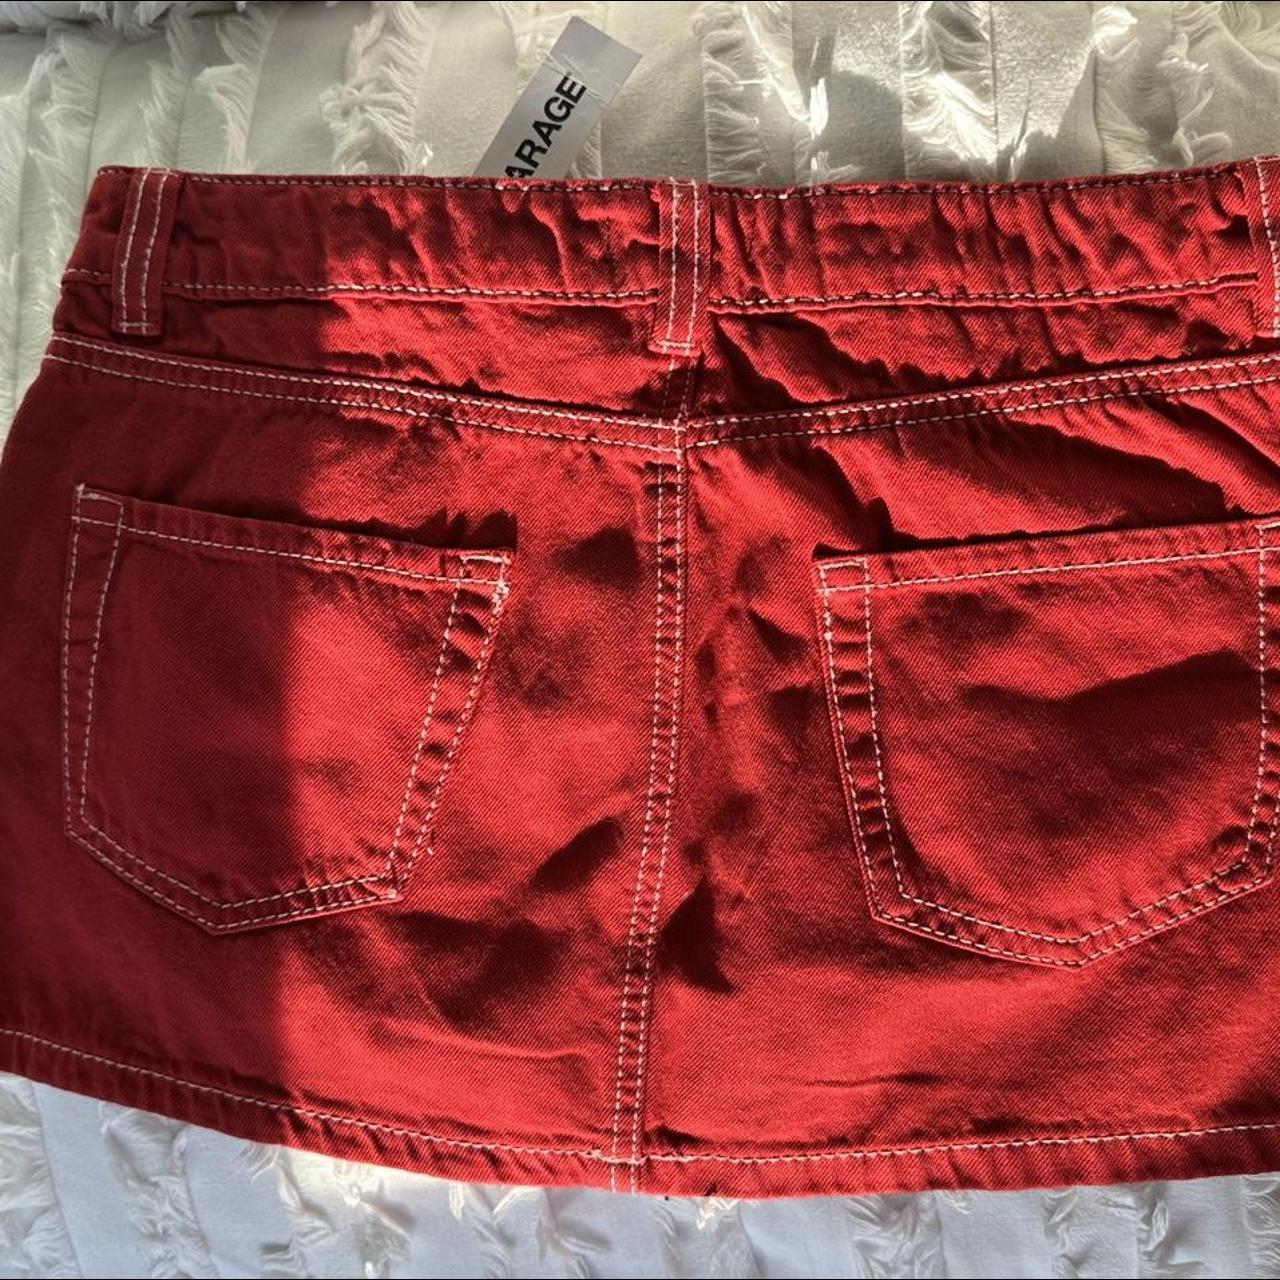 Garage Women's Red Skirt (4)